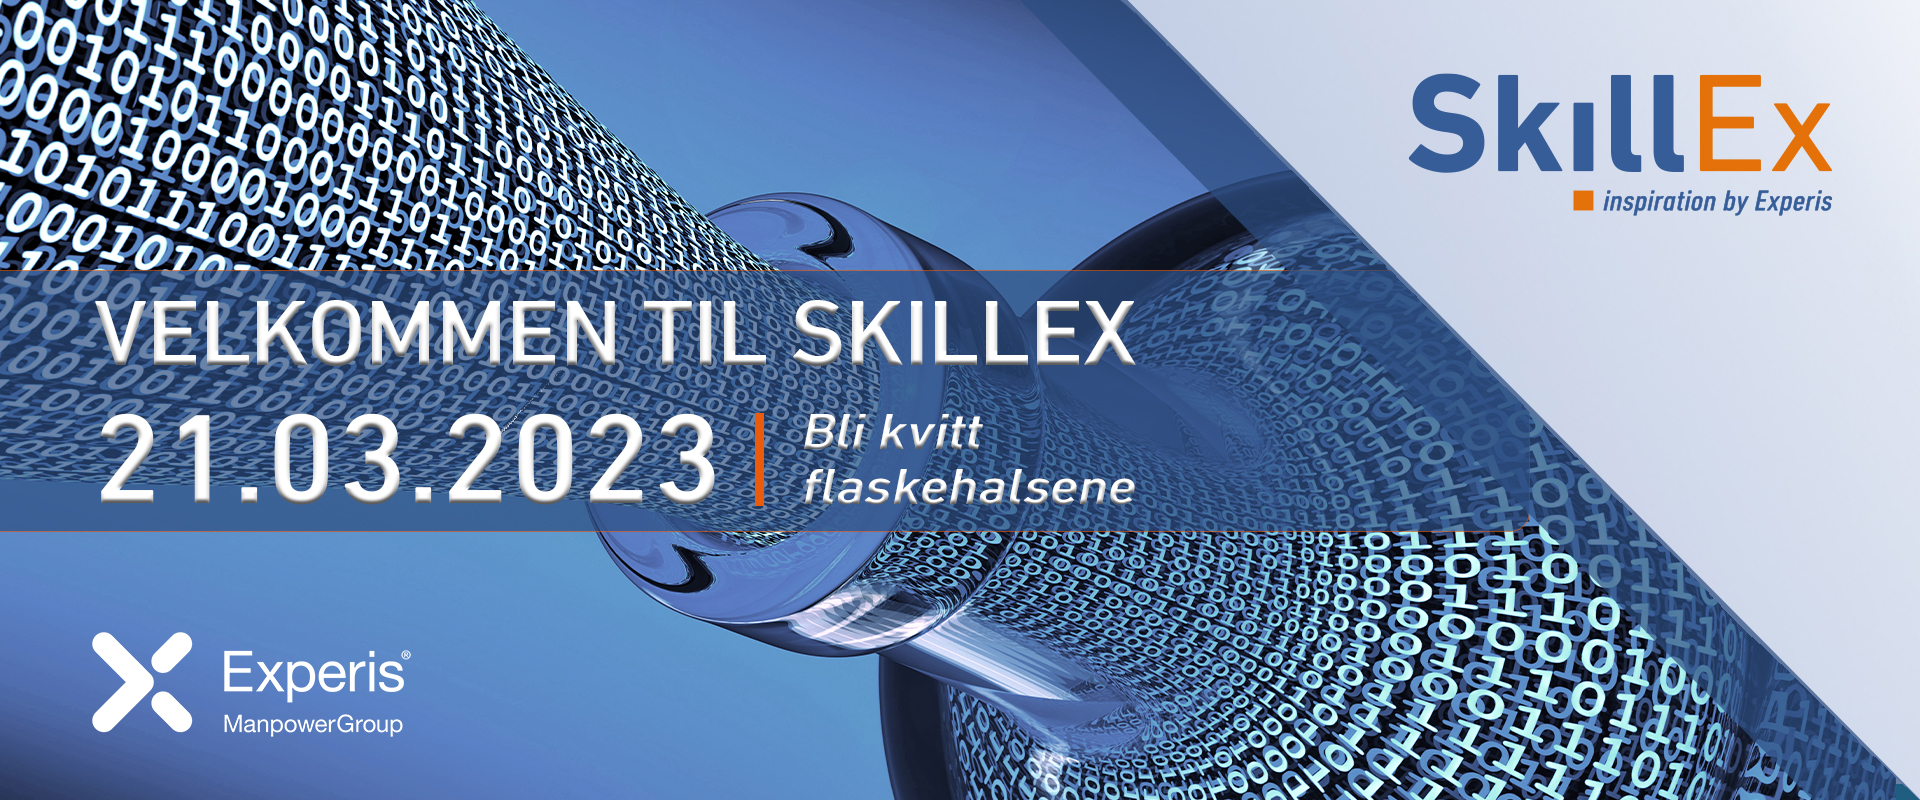 15_23_EXP_SkillEx-banner5 (002)